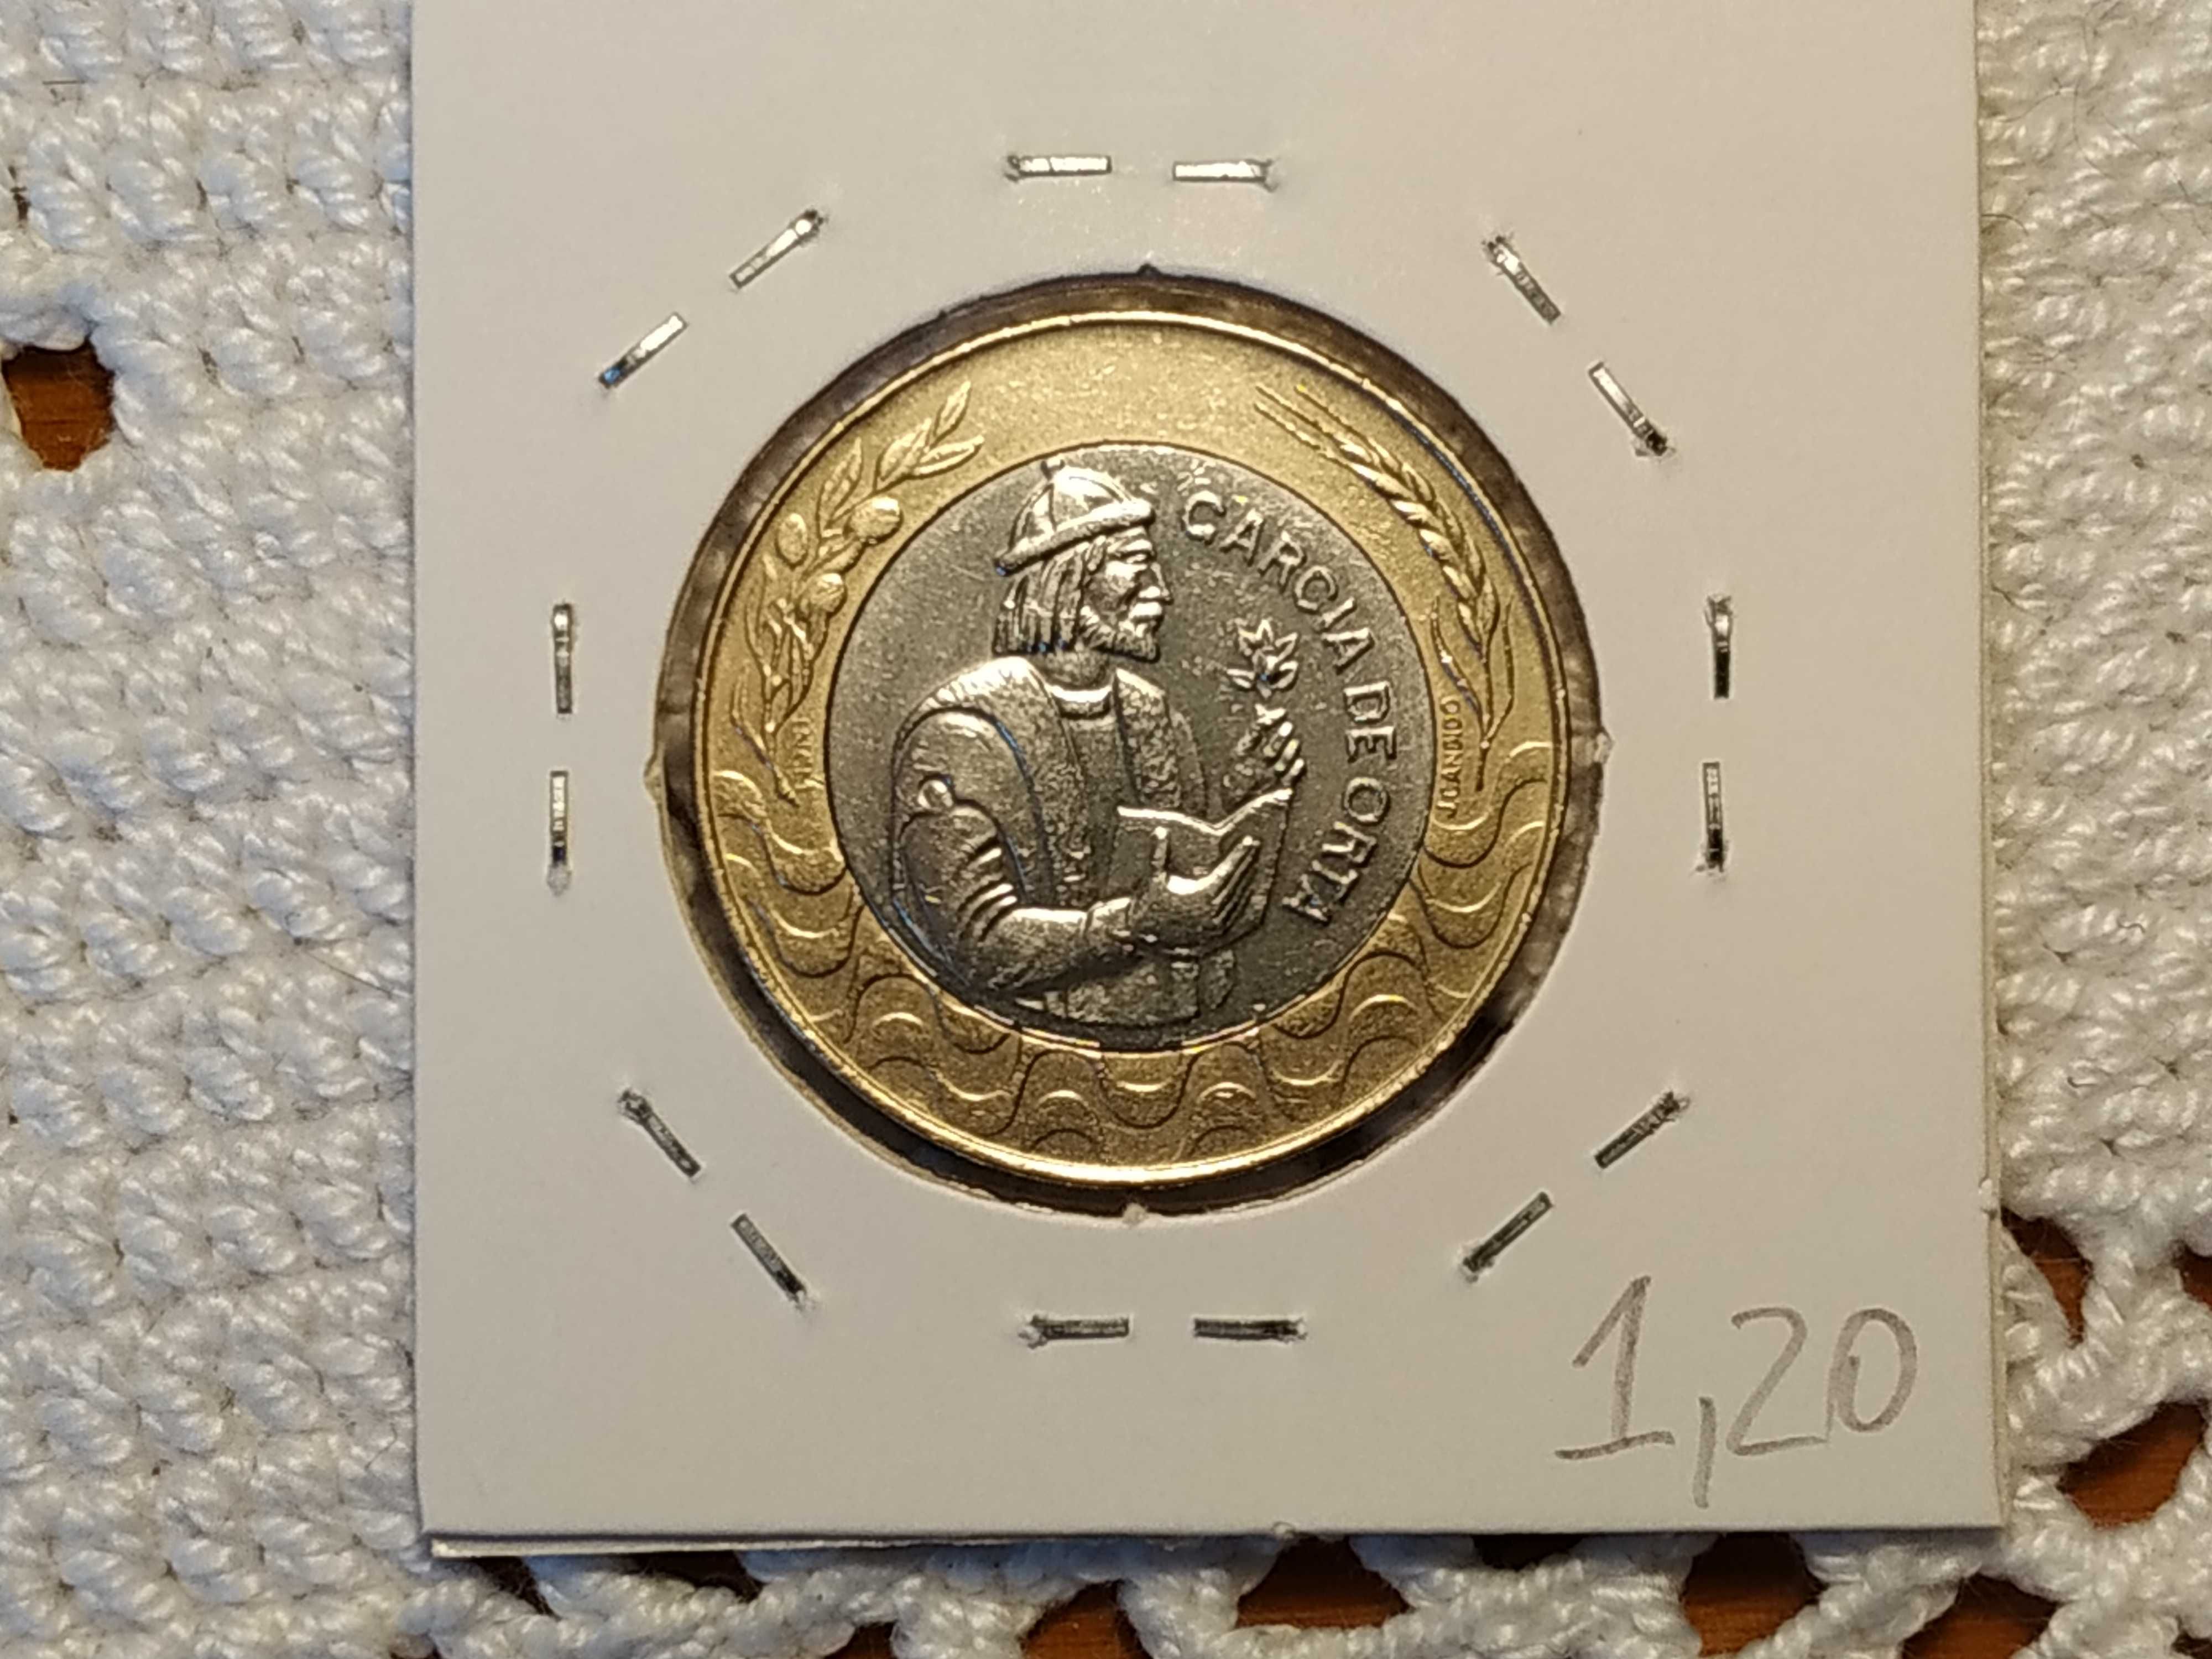 Portugal - moeda de 200 escudos de 1998